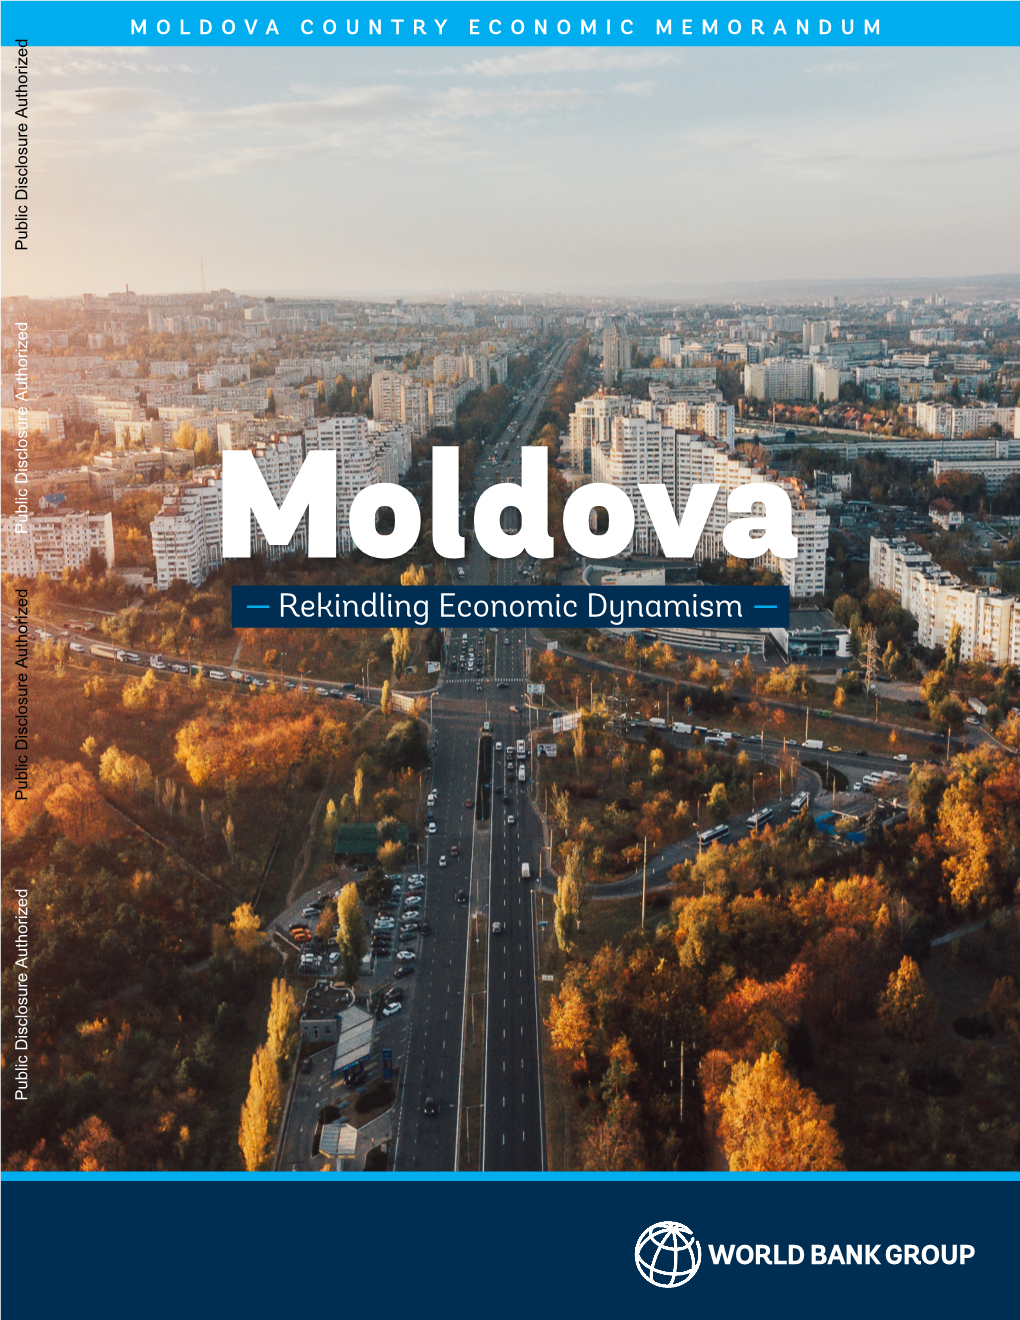 MOLDOVA COUNTRY ECONOMIC MEMORANDUM Public Disclosure Authorized